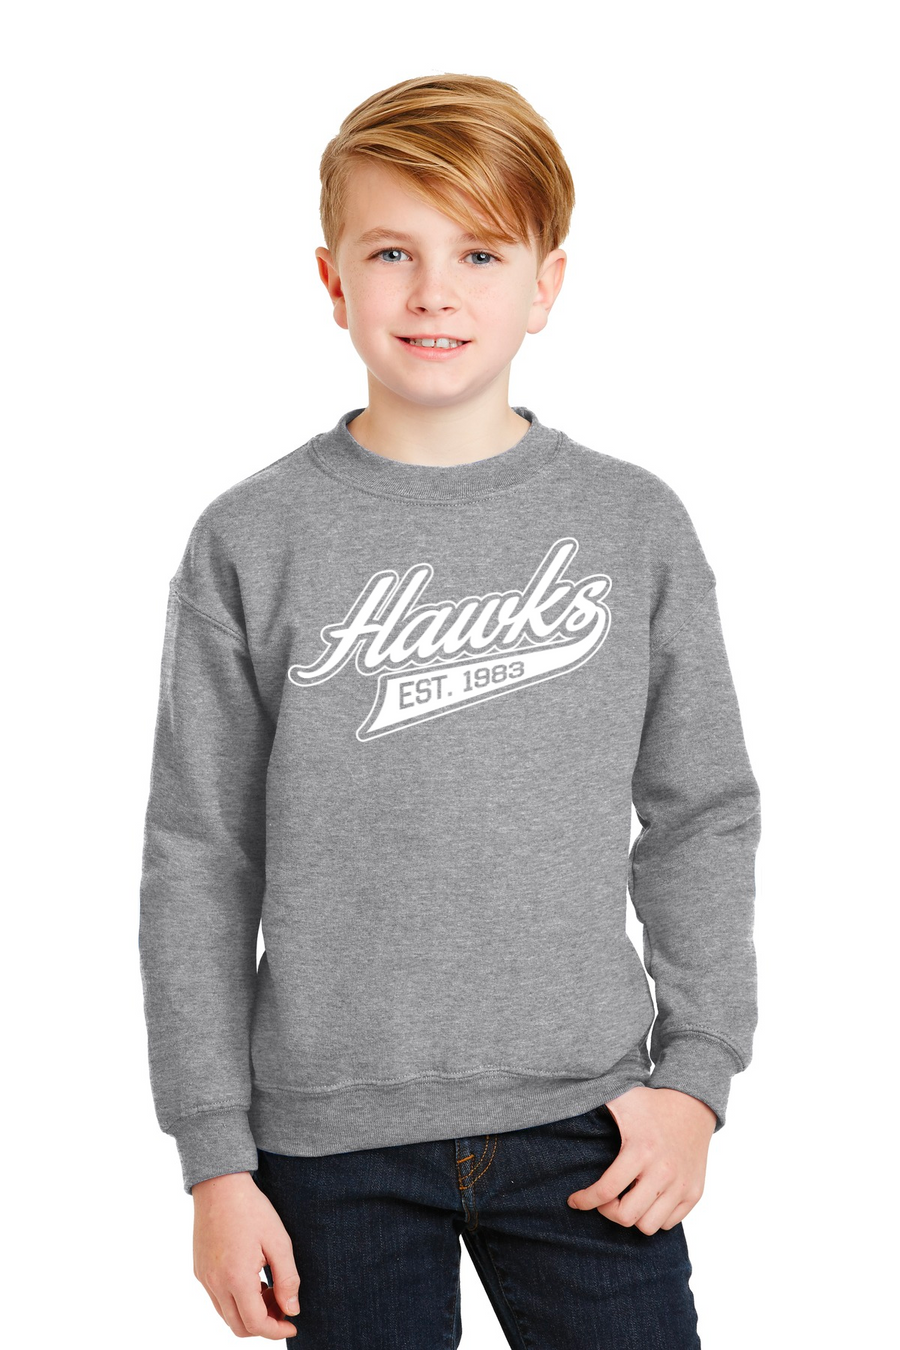 Holcomb Bridge Middle School Spirit Wear 23/24 On-Demand-Unisex Crewneck Sweatshirt Cursive Hawks Logo